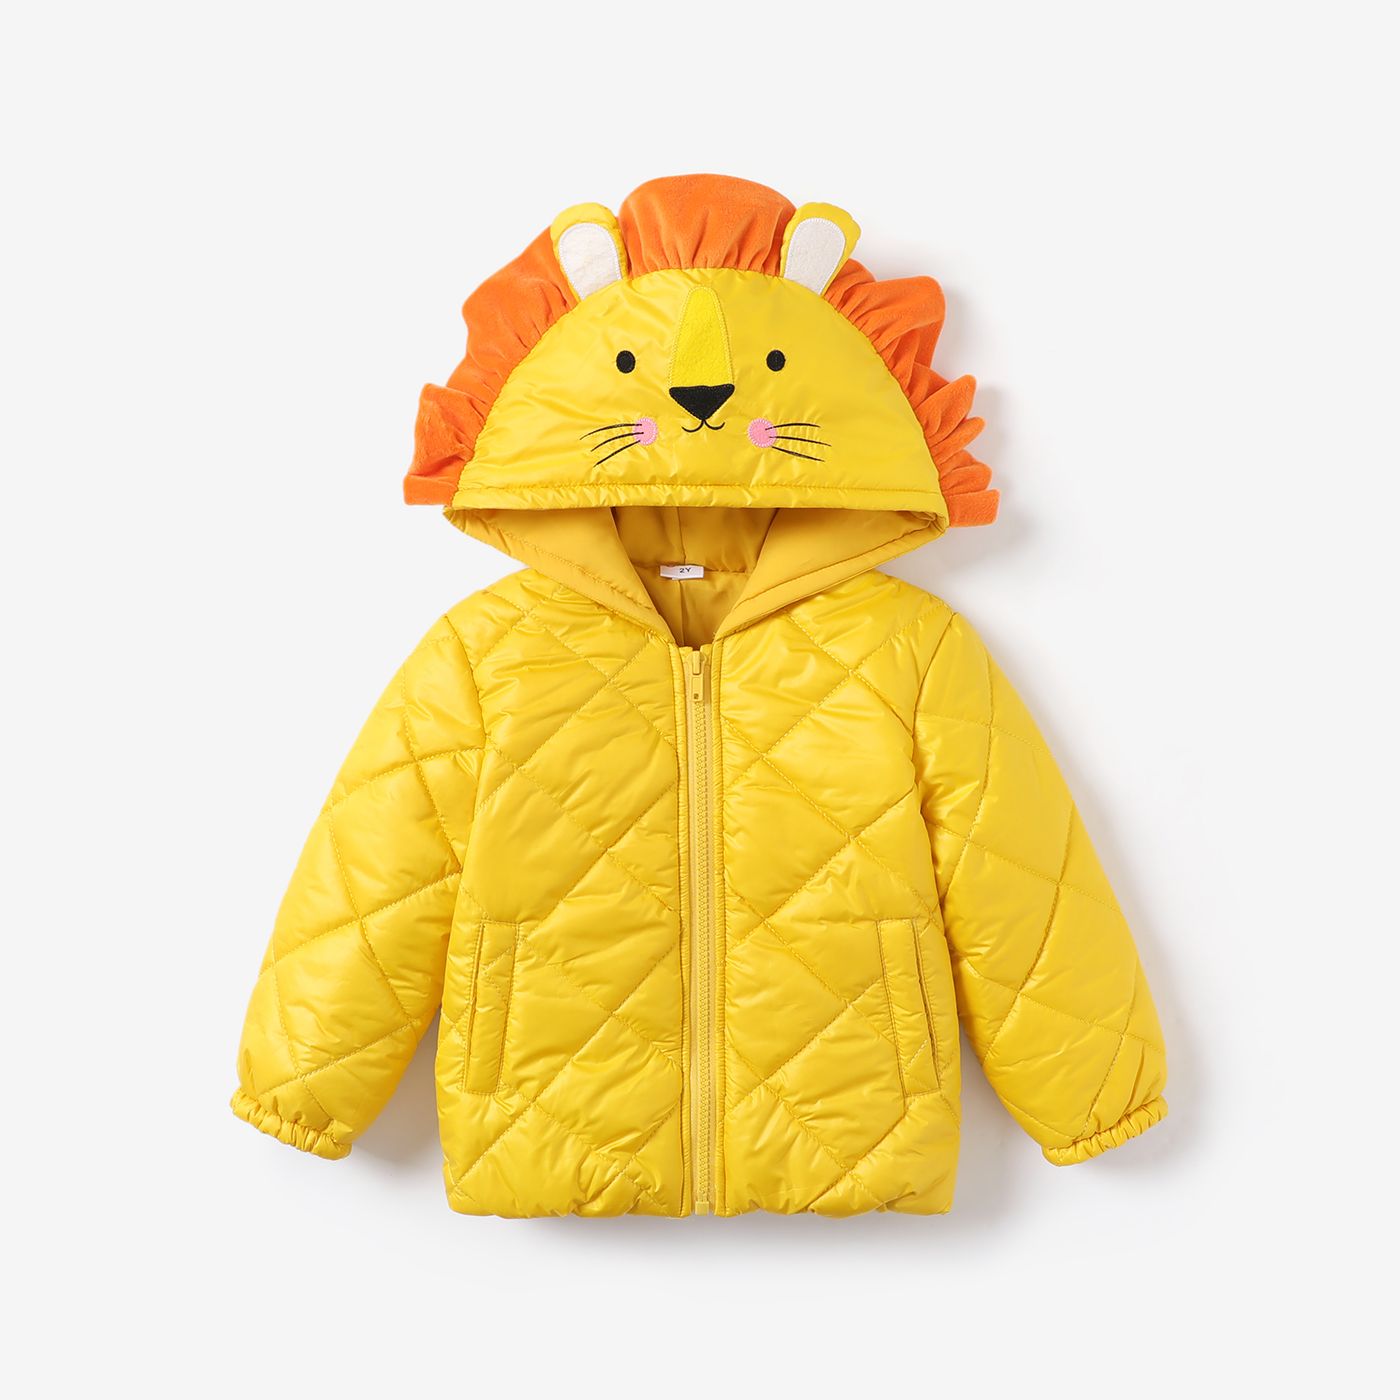 Toddler Boys Hyper-Tactile 3D Animal Print Cotton Hooded Coat/Jacet